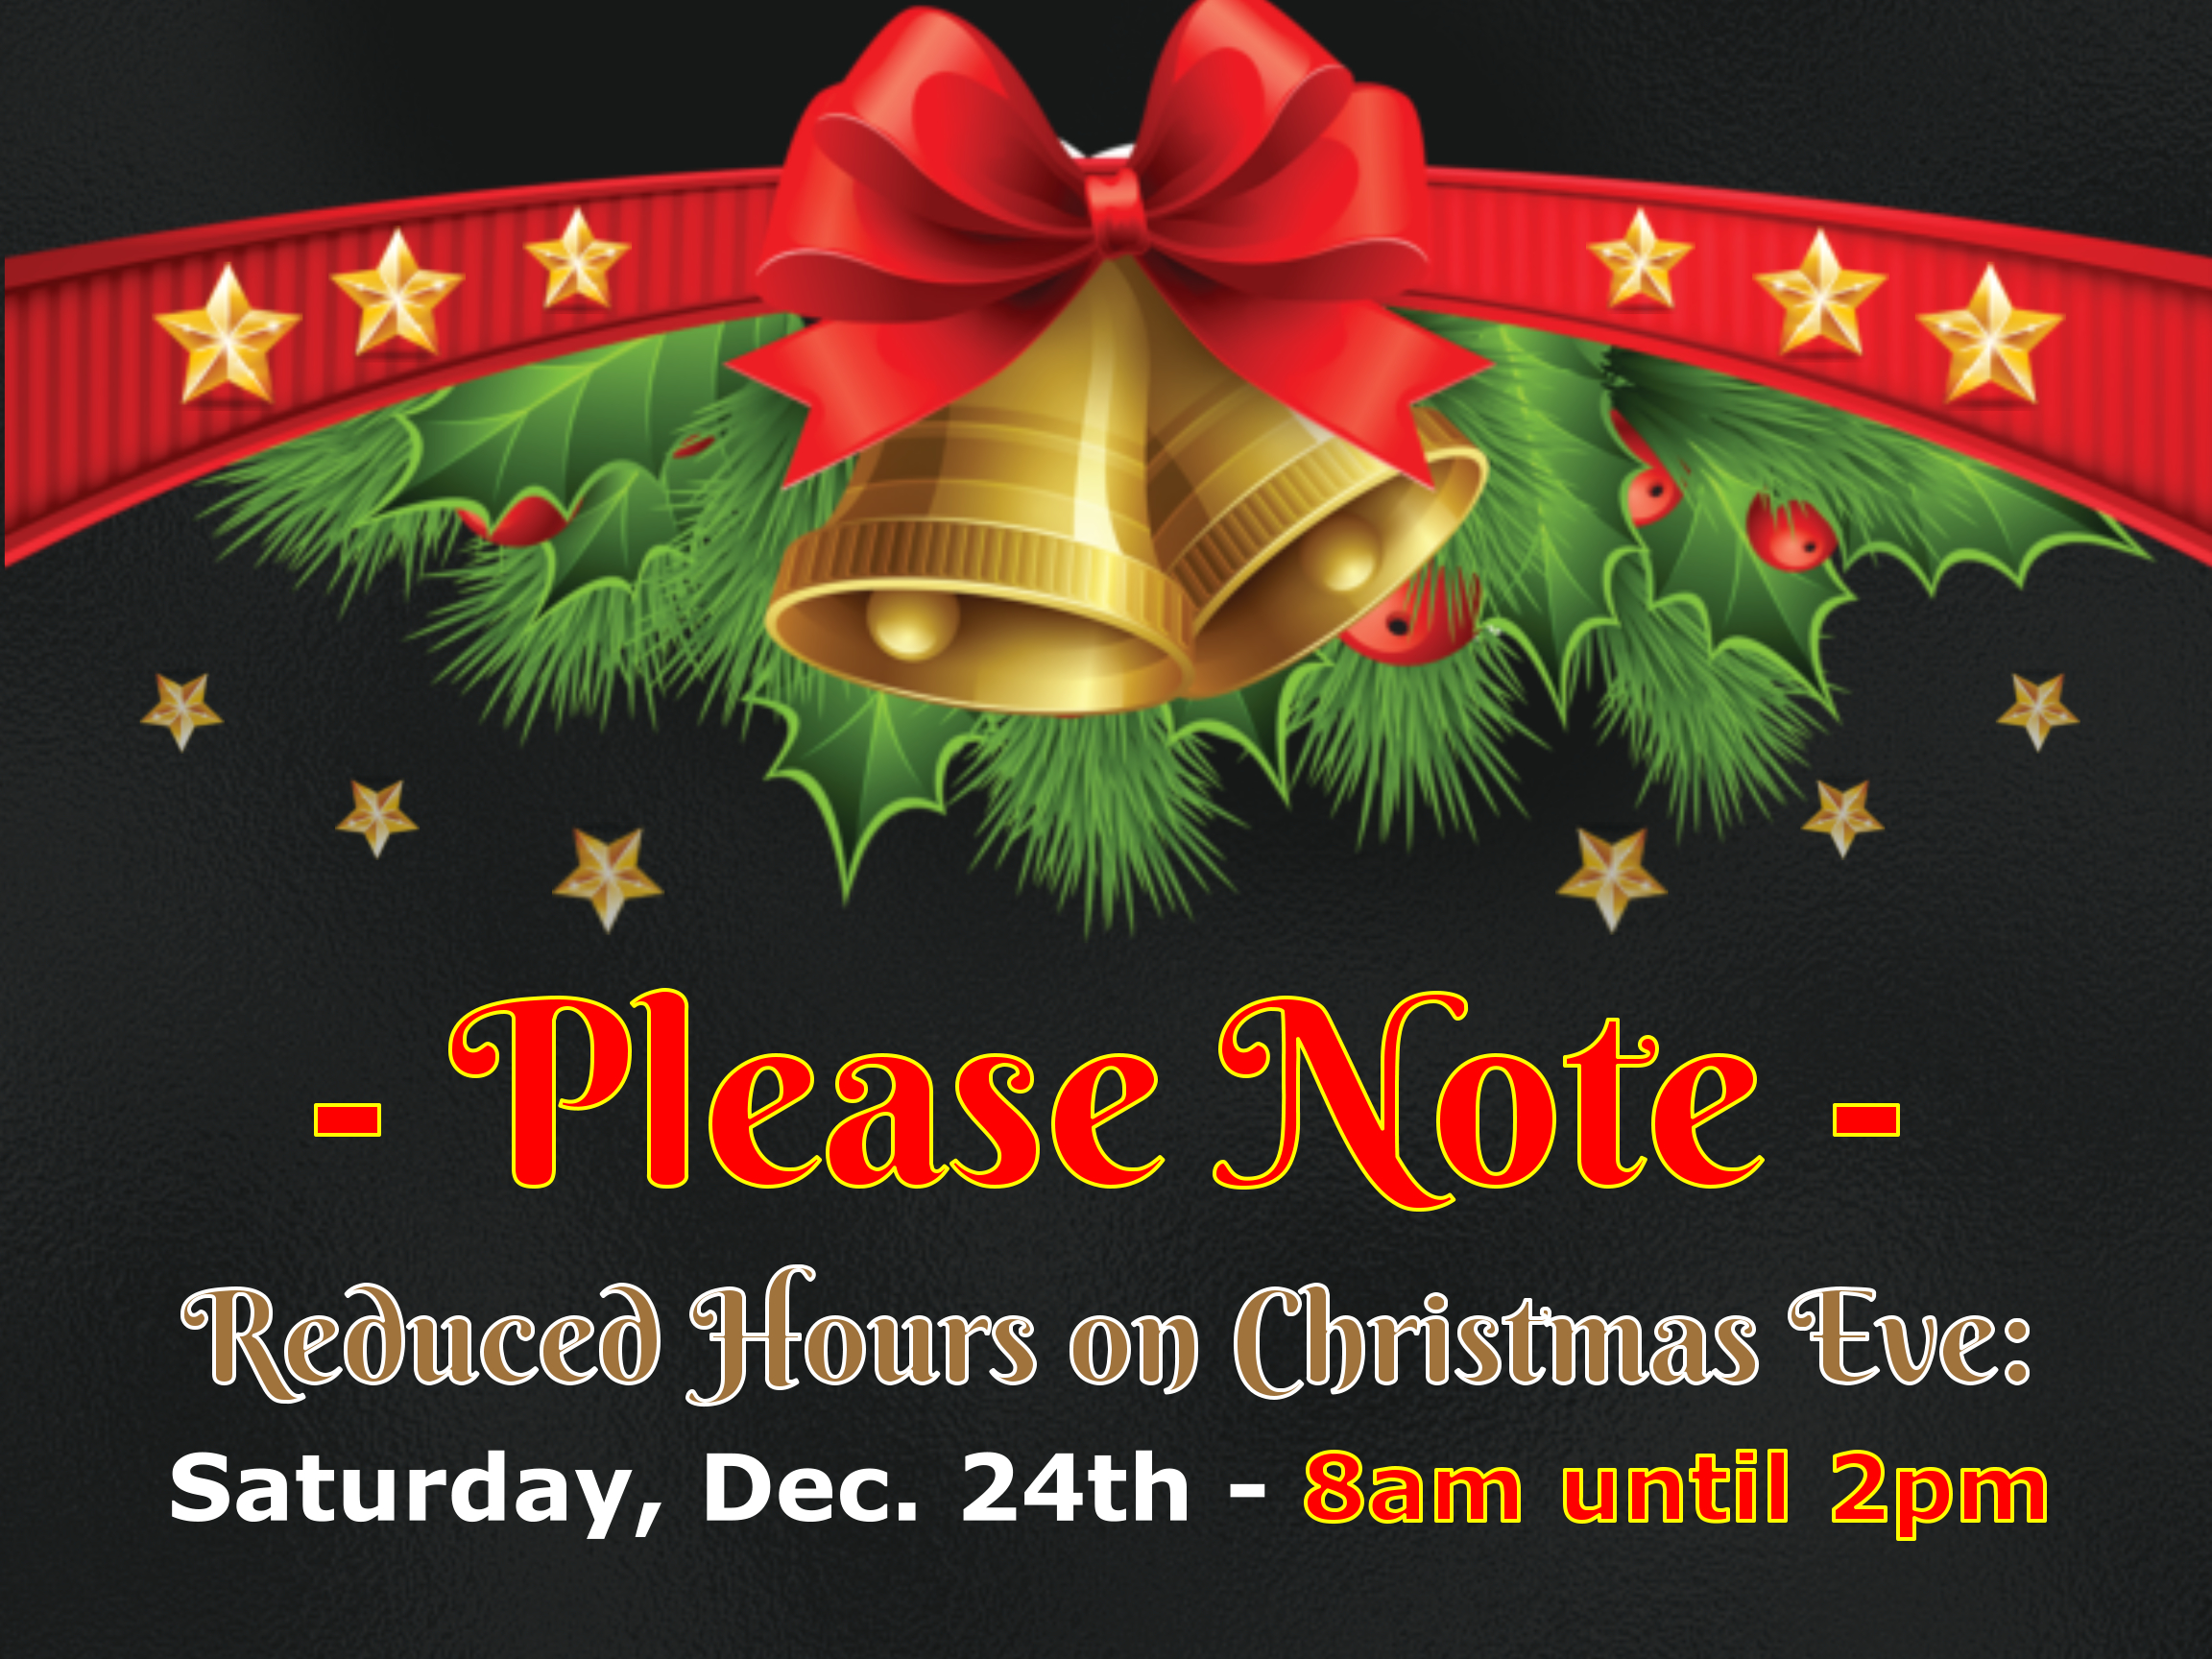 Reduced Hours Christmas Eve